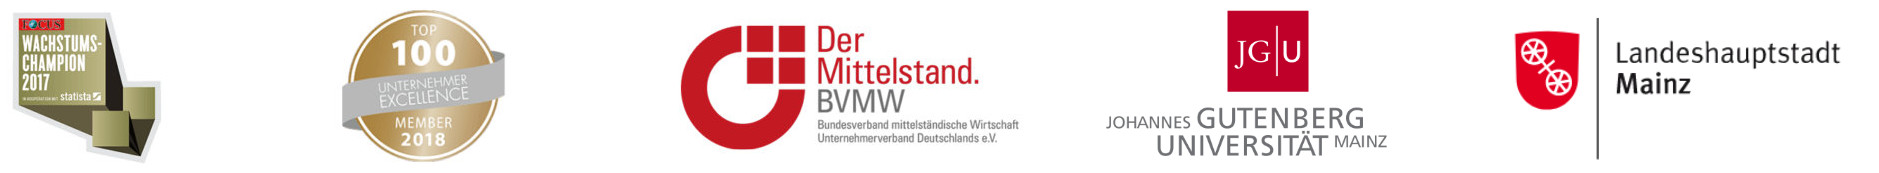 Elektriker Mainz Banner